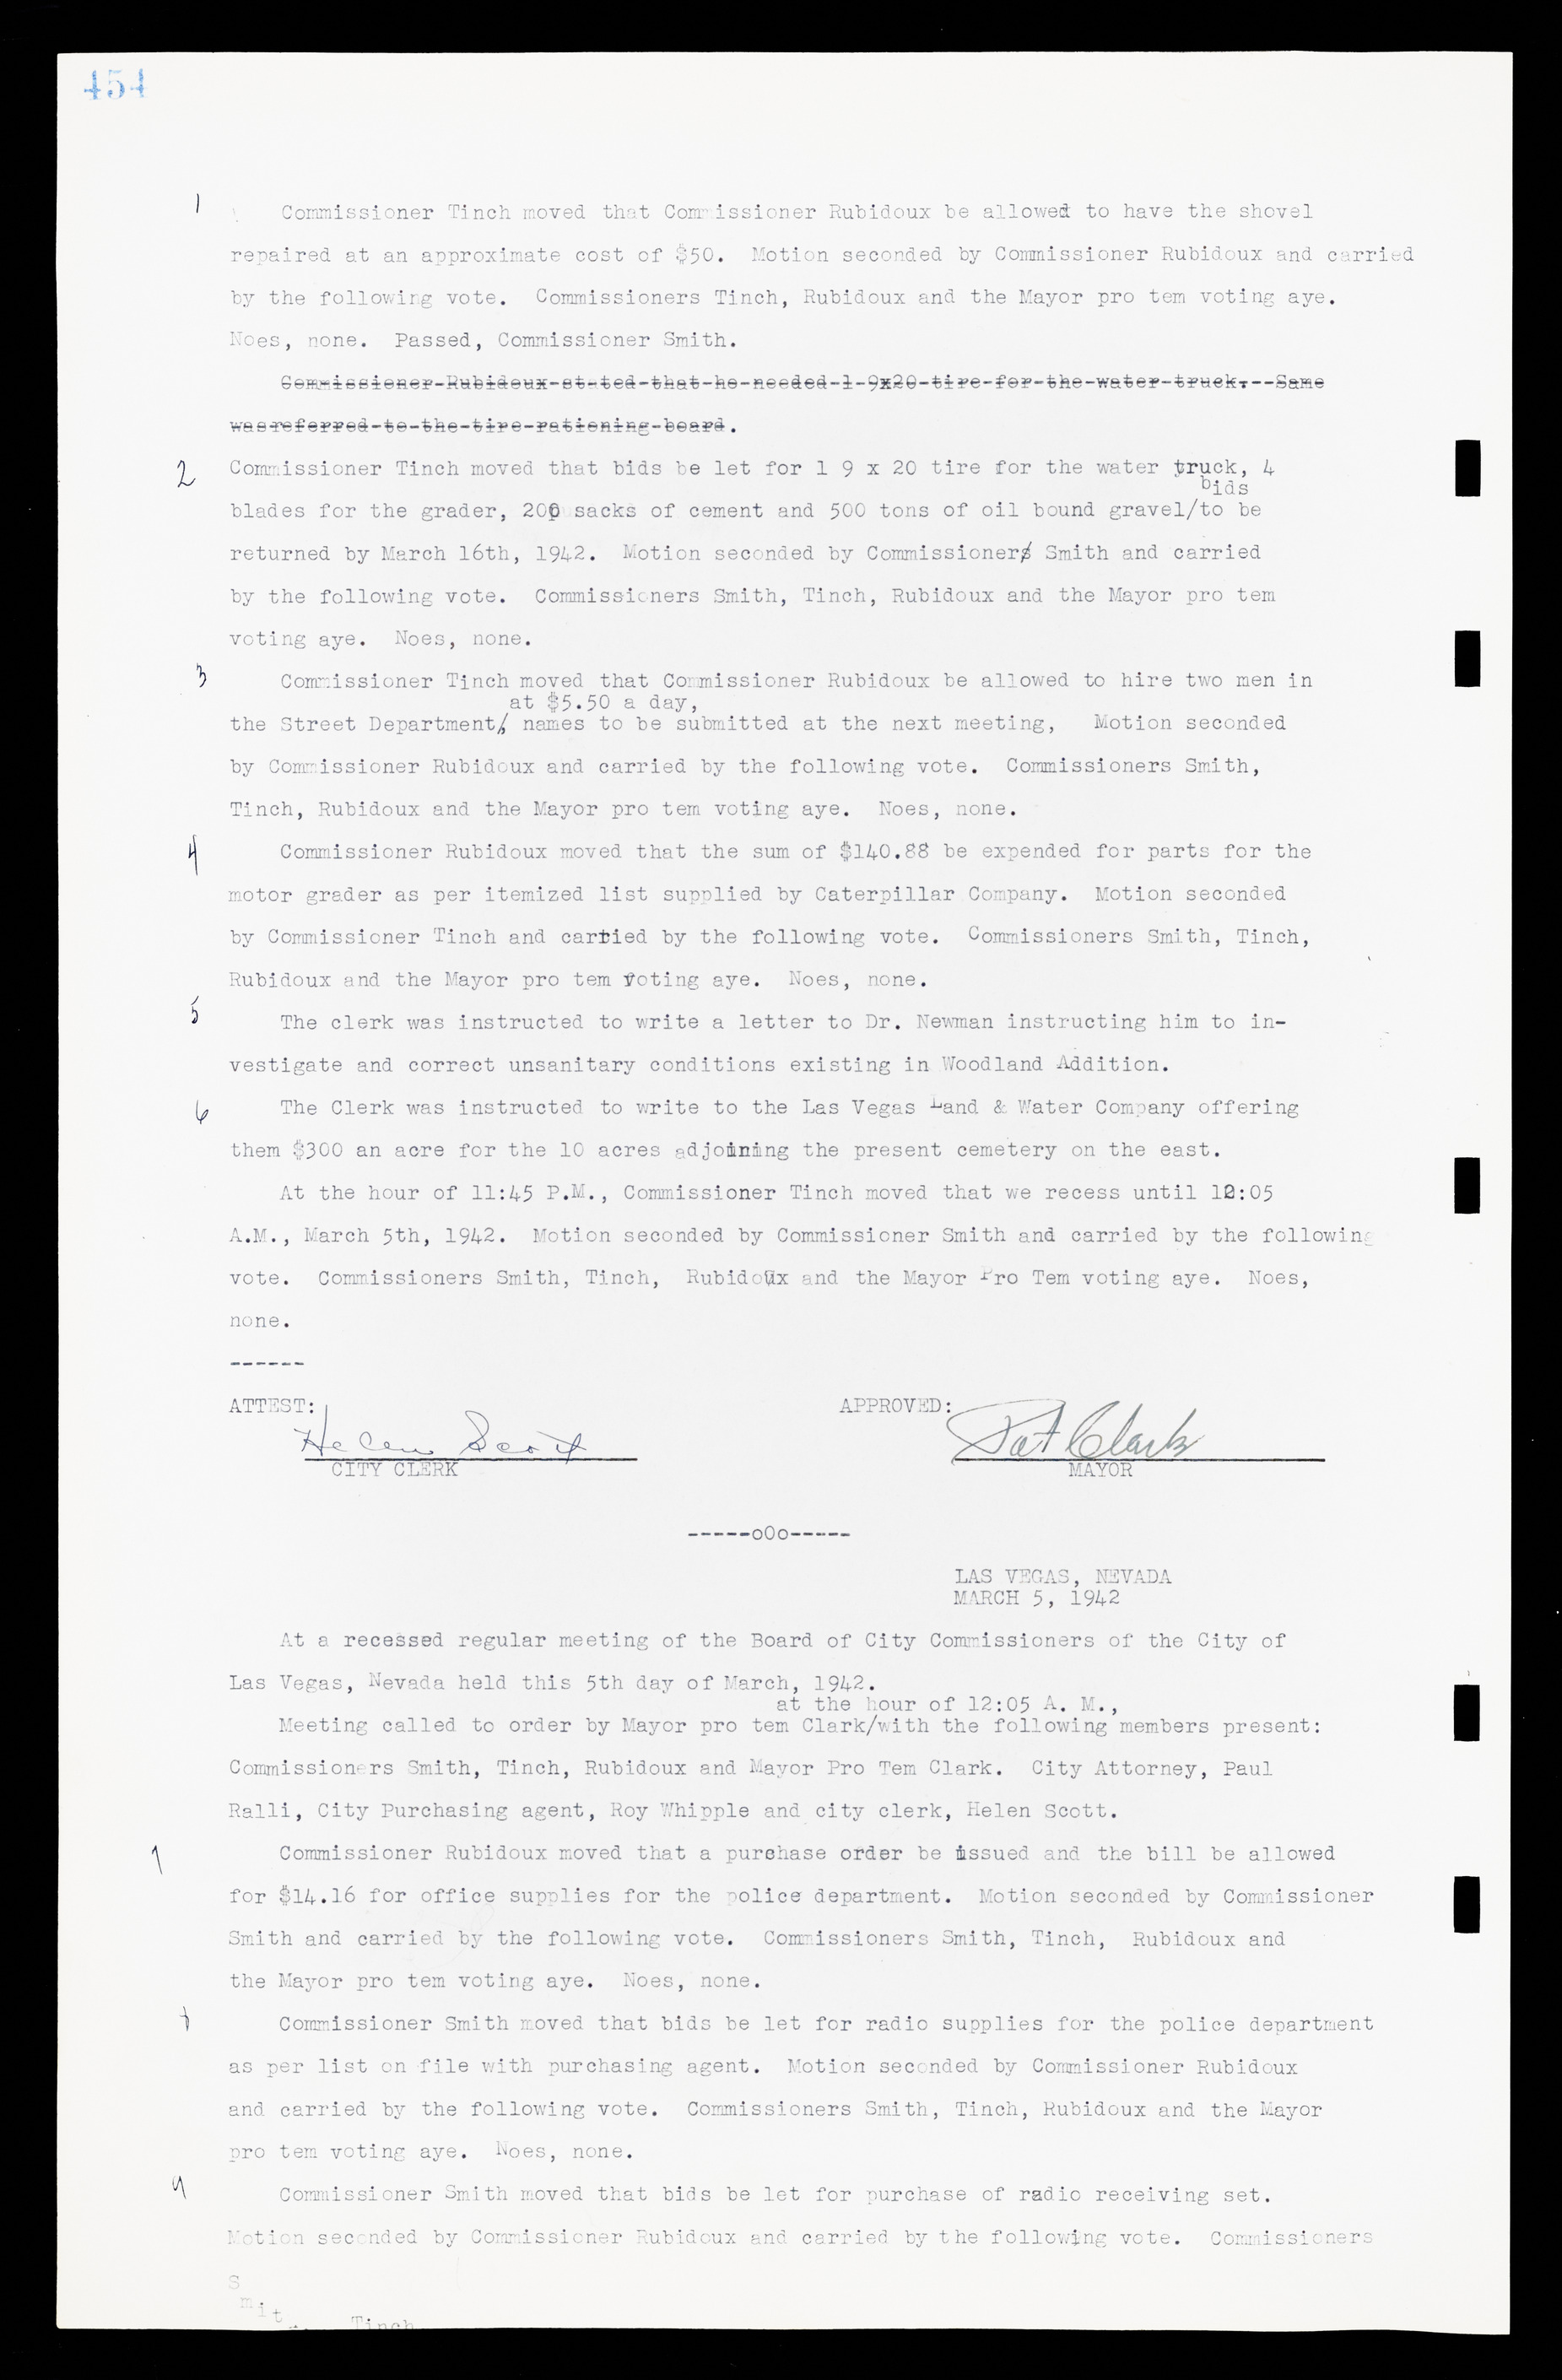 Las Vegas City Commission Minutes, February 17, 1937 to August 4, 1942, lvc000004-482